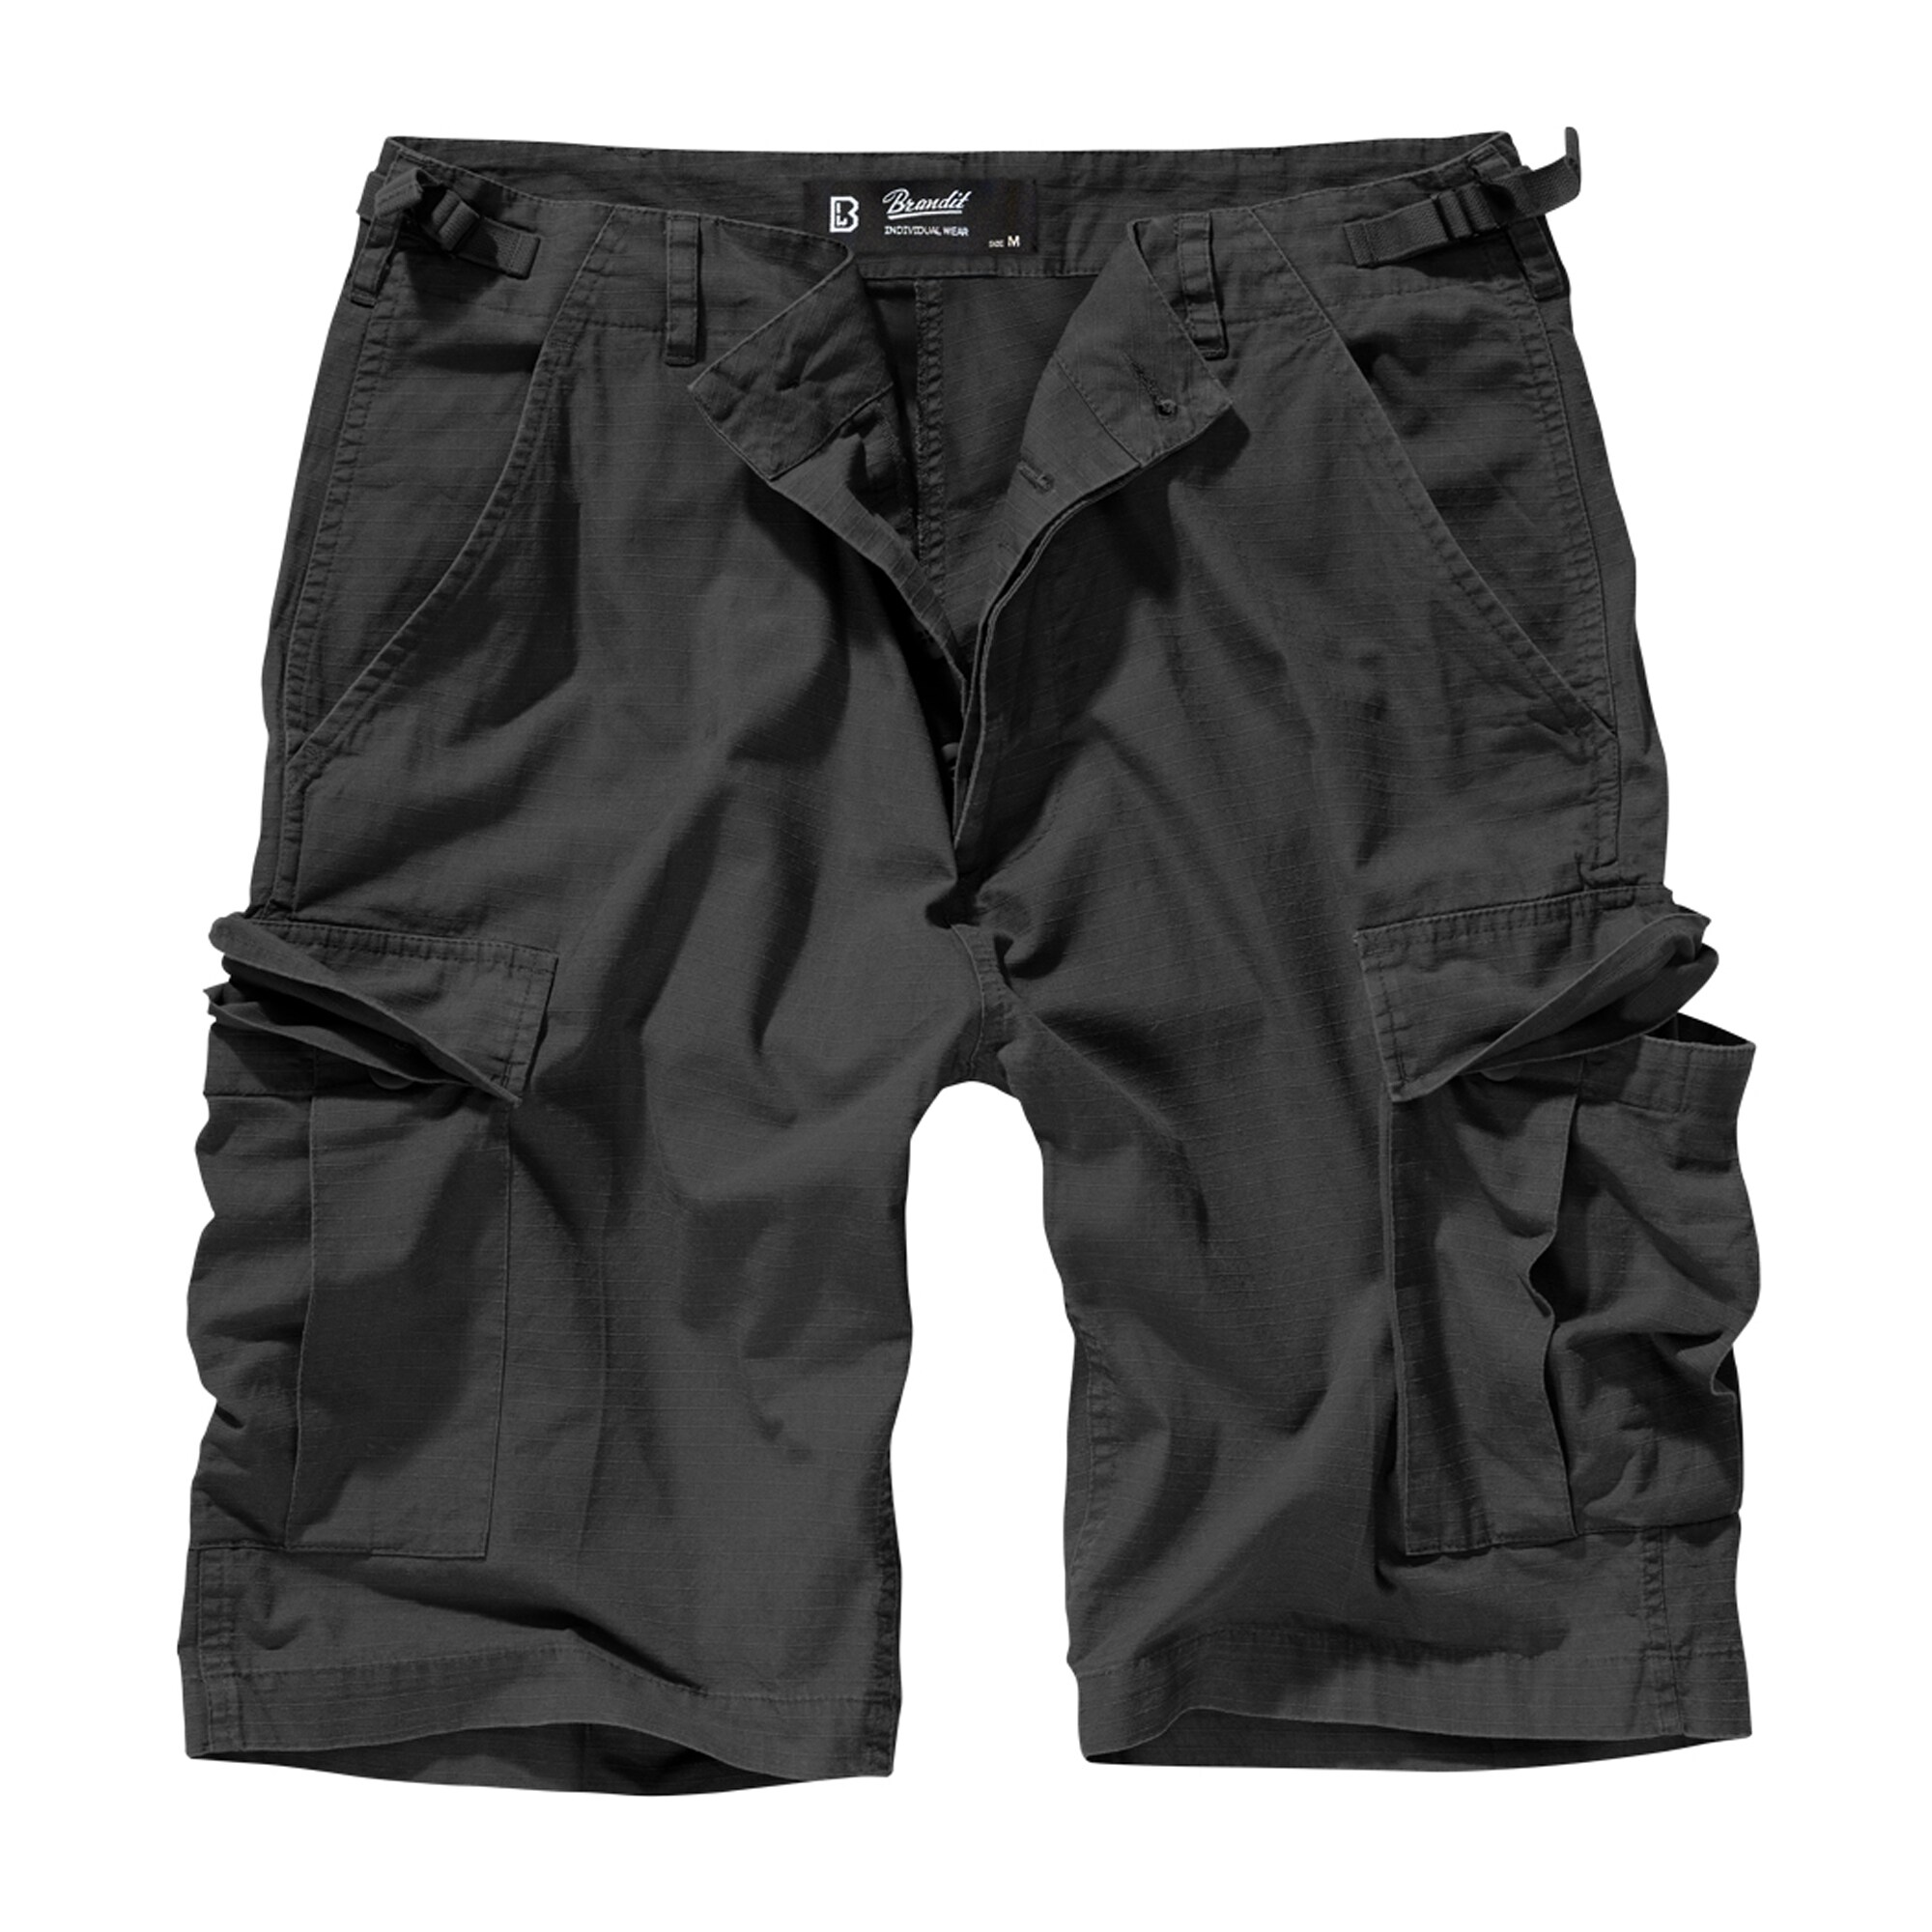 Purchase the Brandit Ripstop BDU Shorts black by ASMC